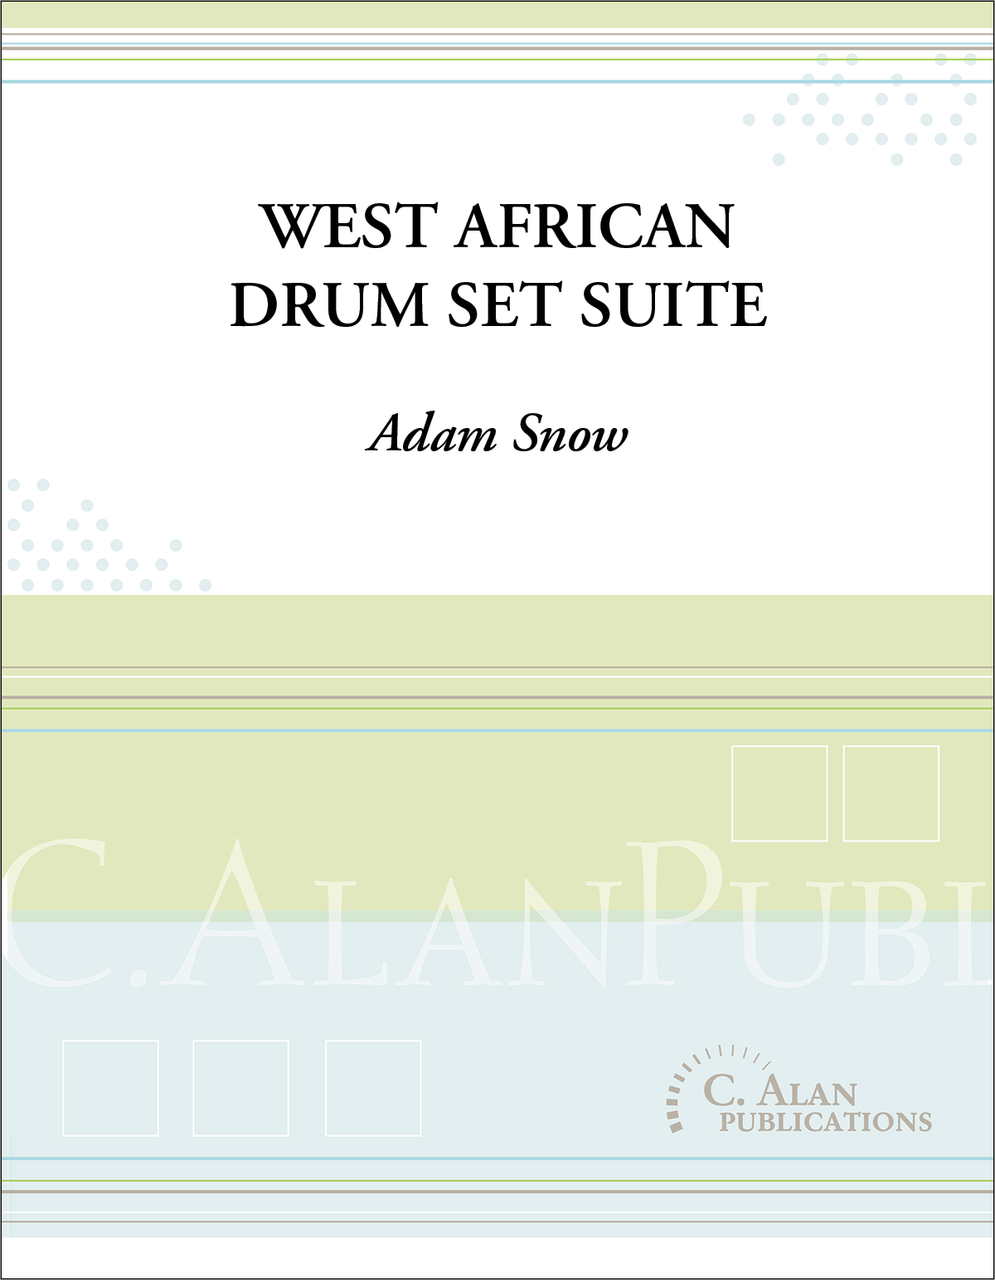 West African Drum Set Suite by Adam Snow